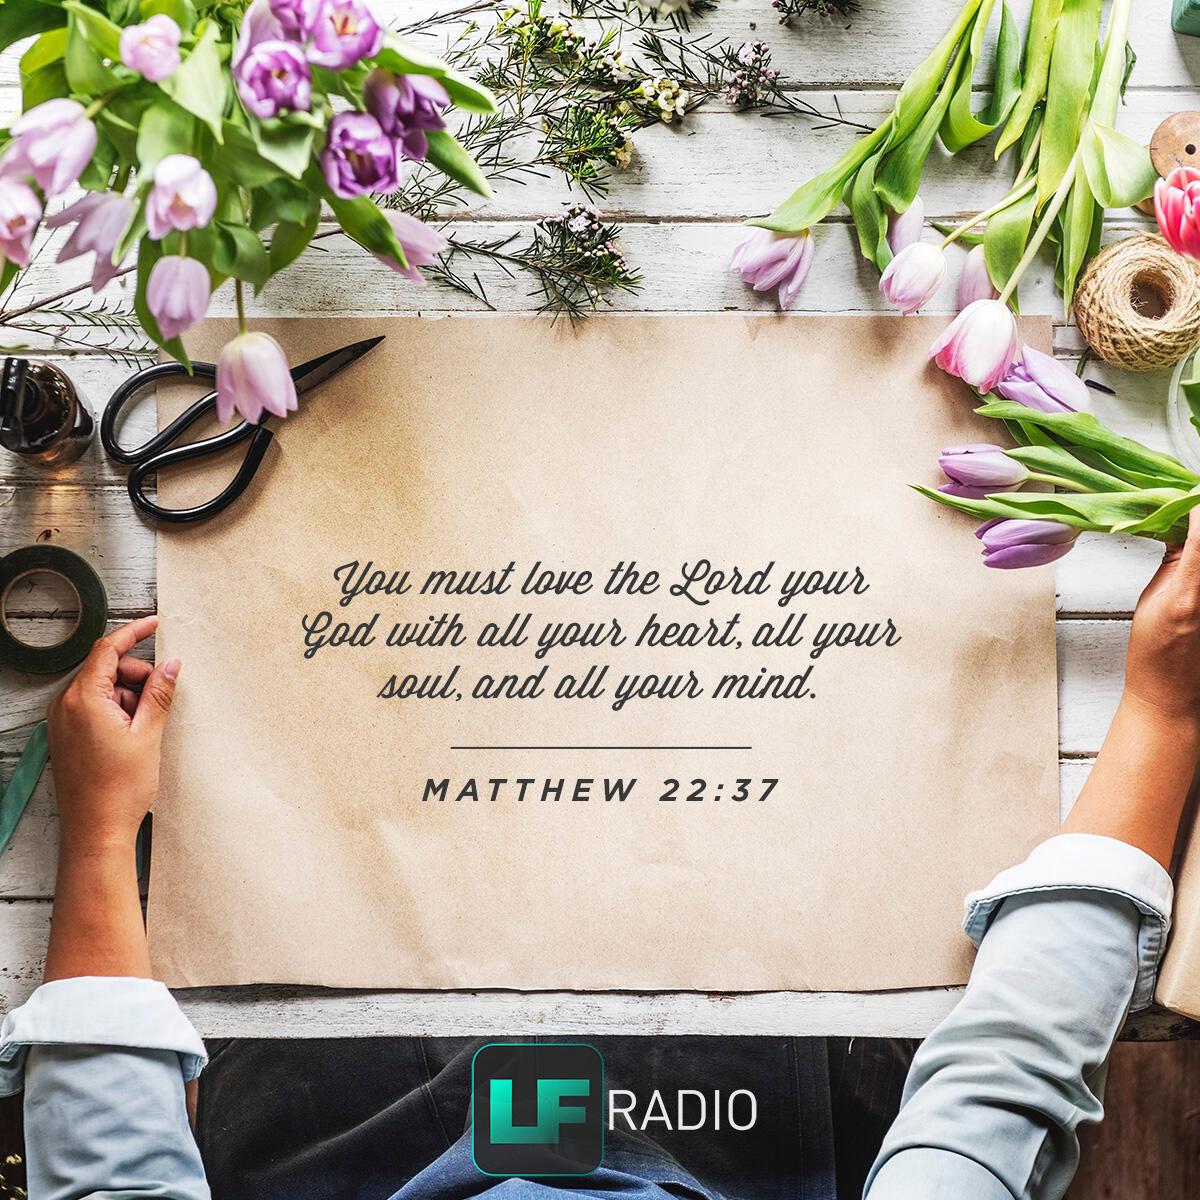 Matthew 22:37 - Verse of the Day